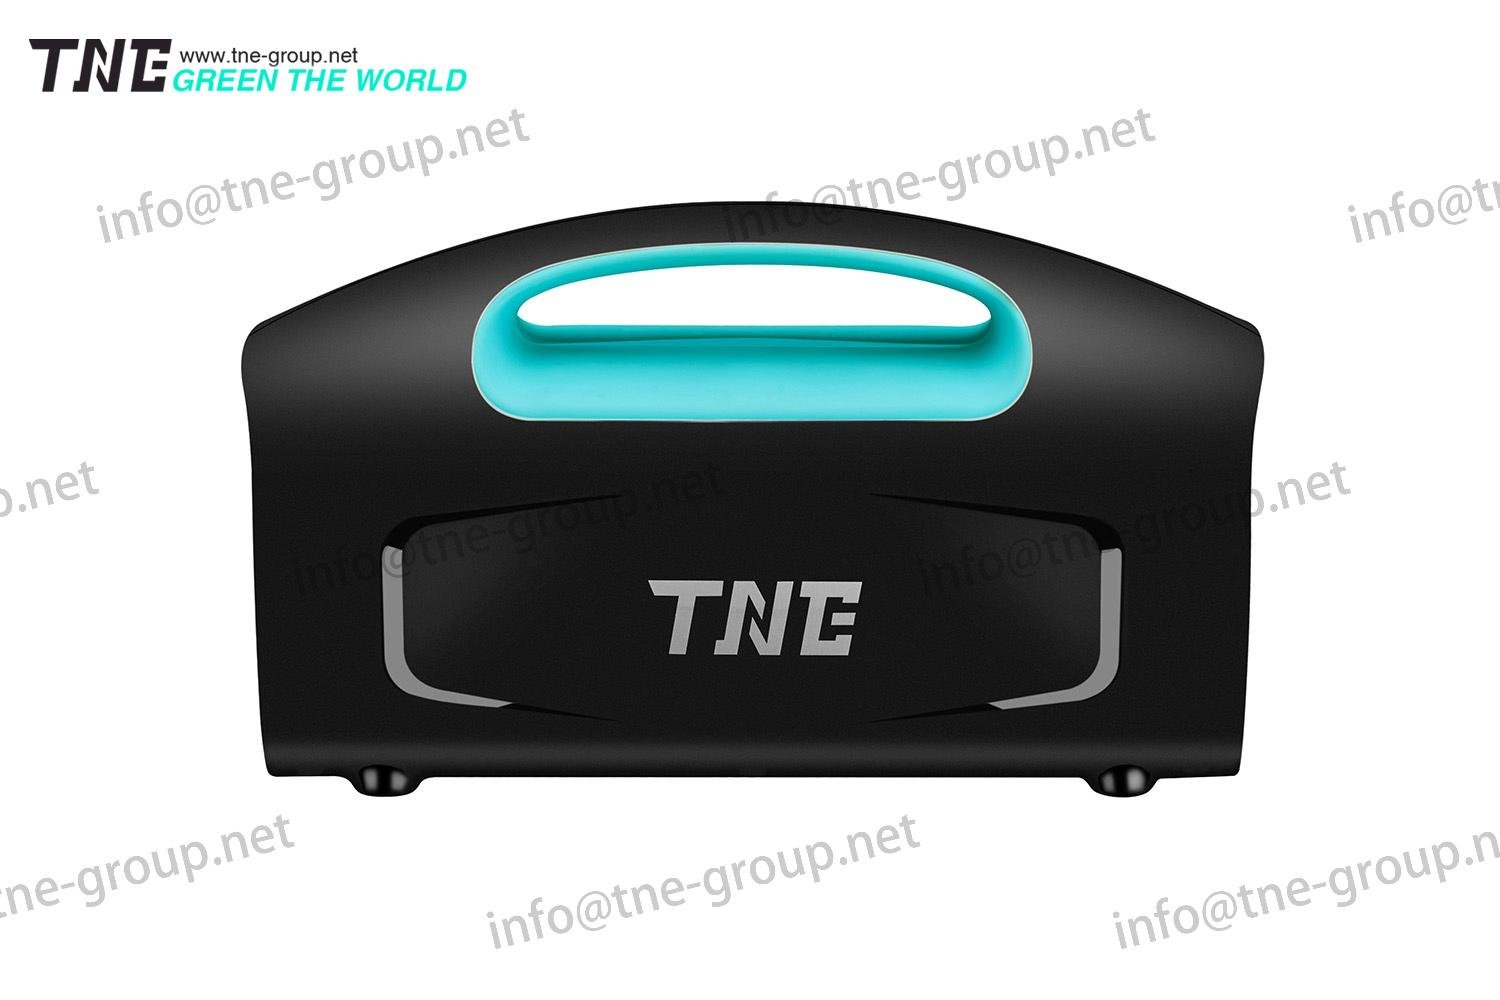 TNE solar online high frequency mini ups tportable generator power bank